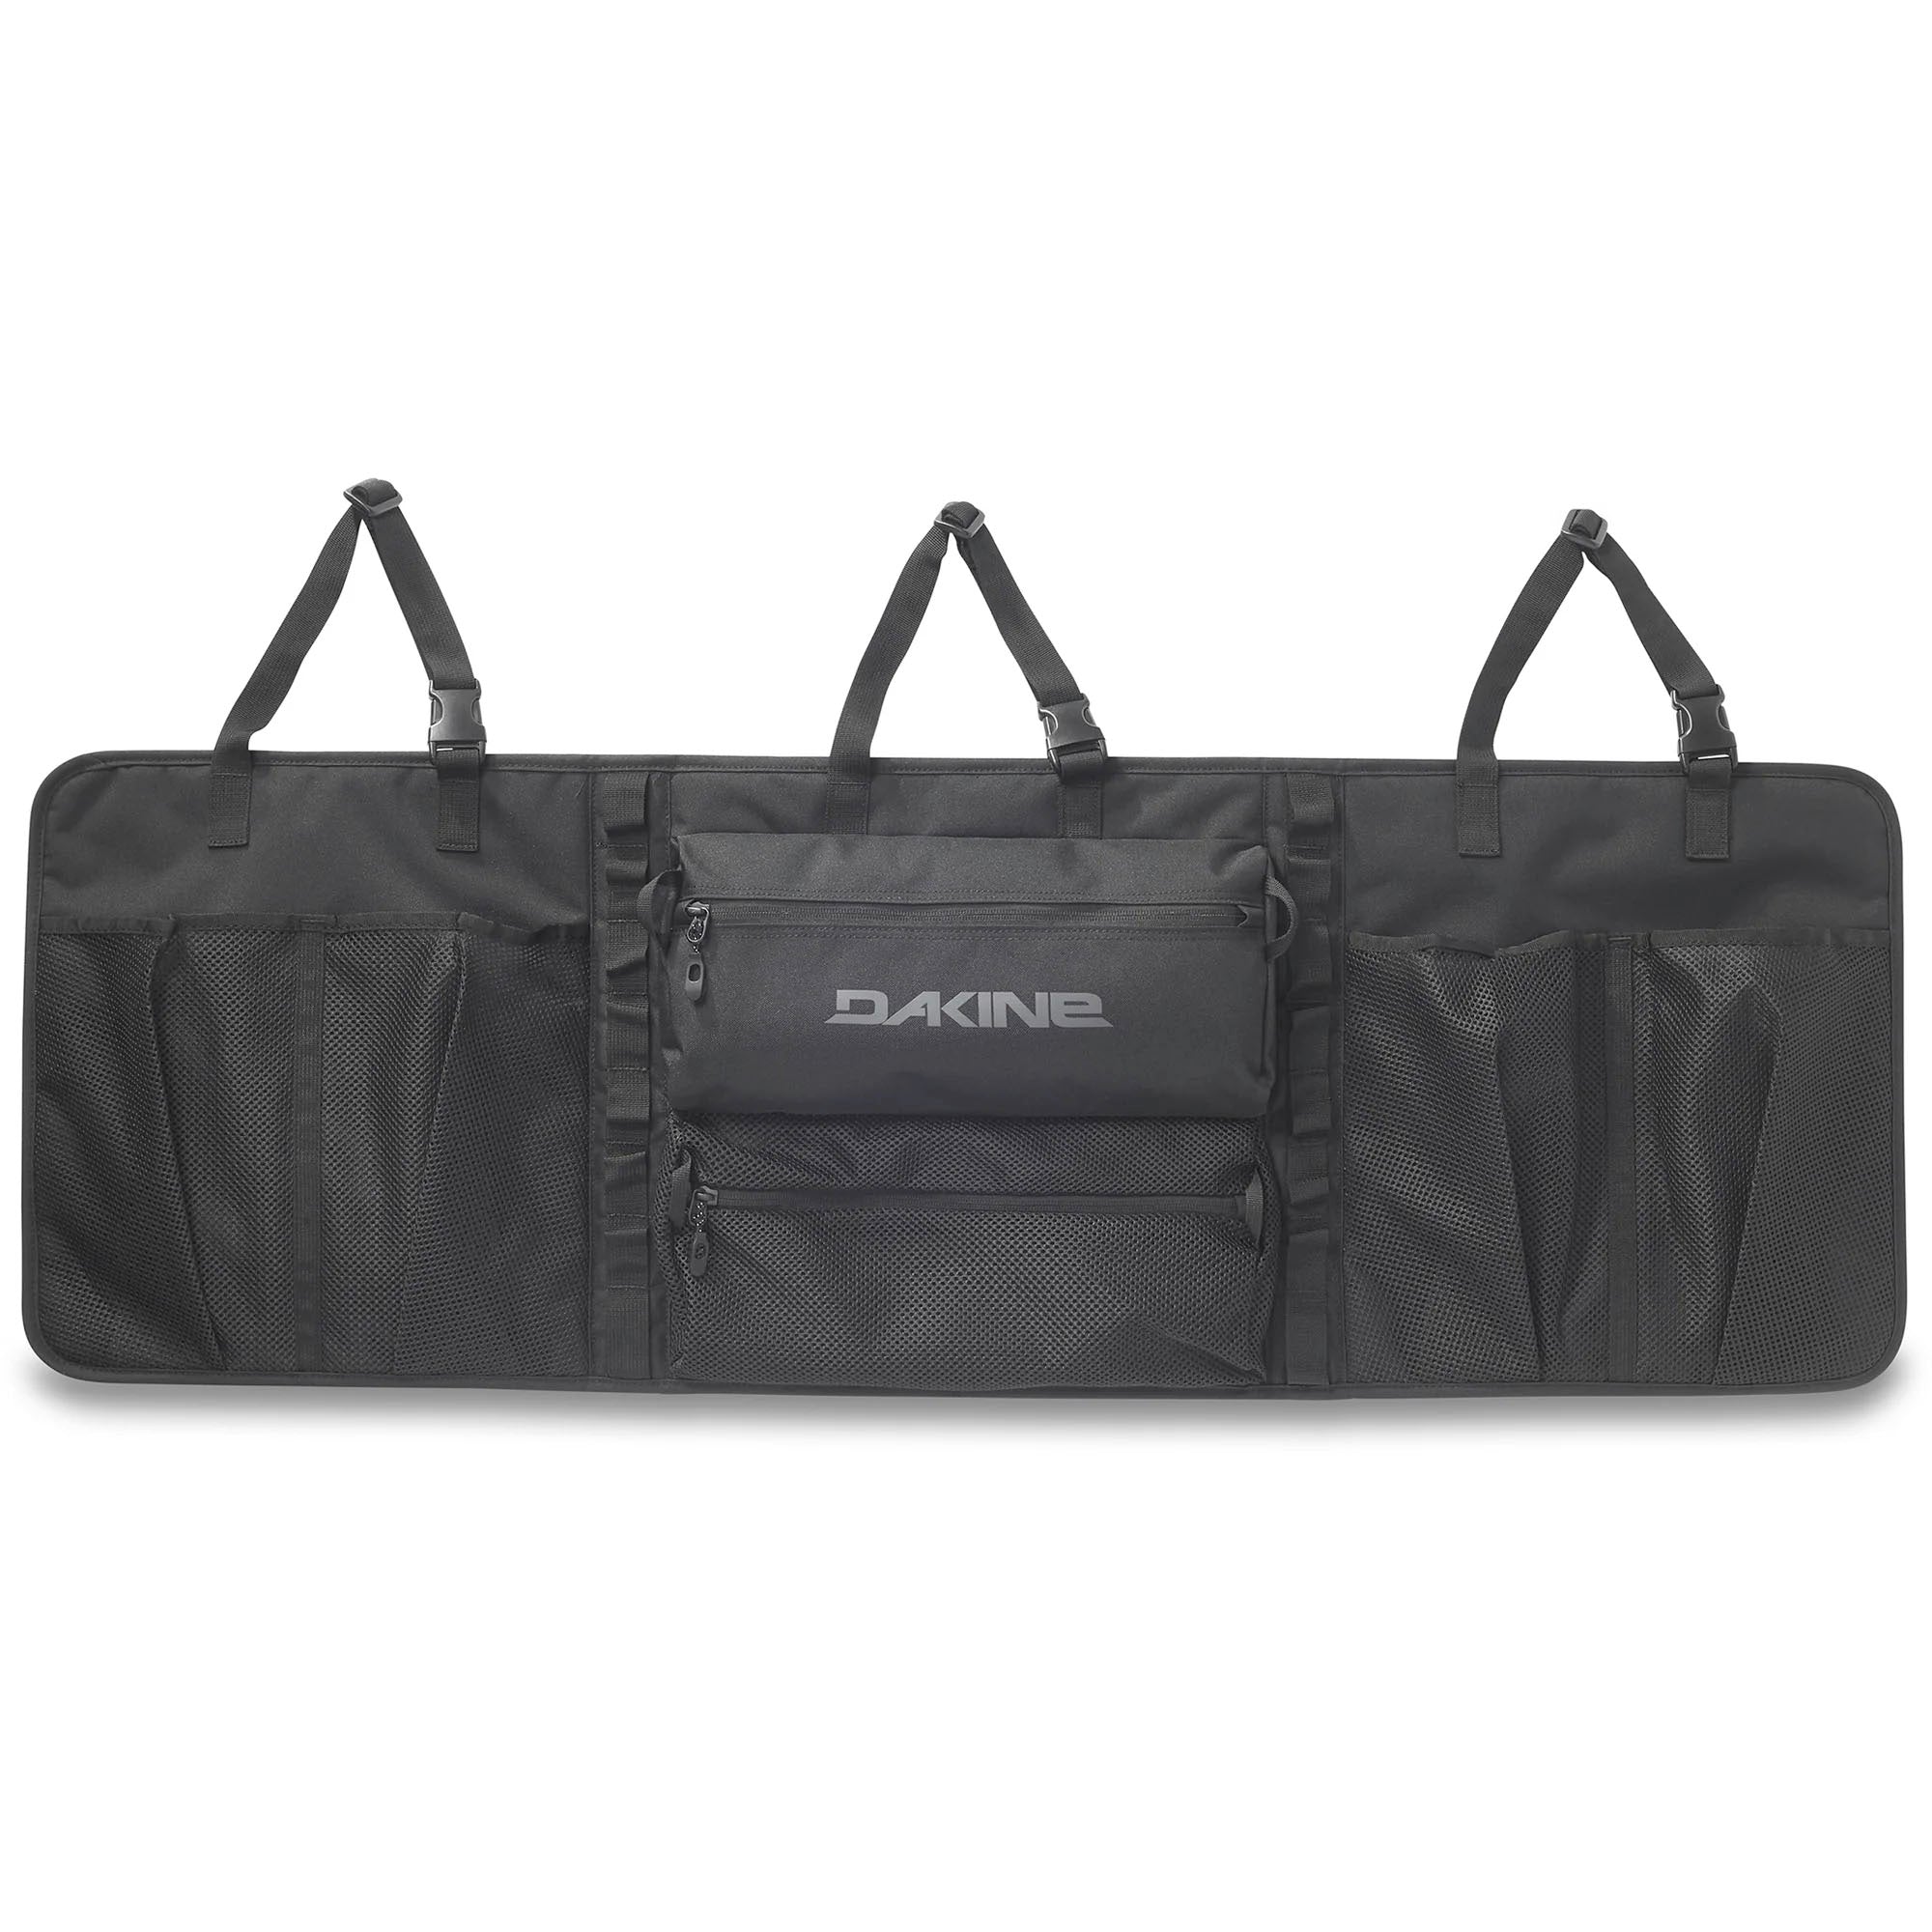 Dakine Carbacker Gear Storage Car Bag